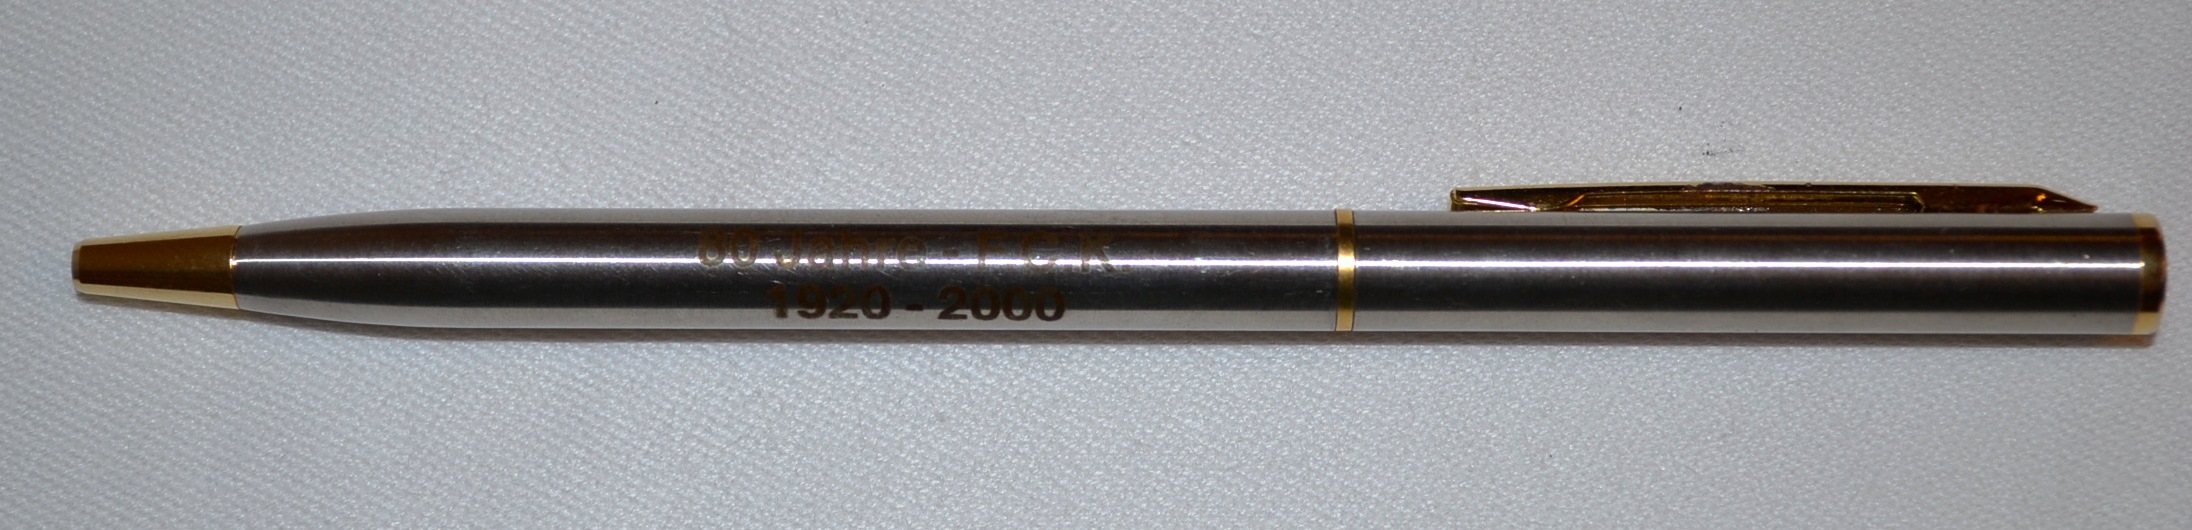 FCK Kugelschreiber 80 Jahre